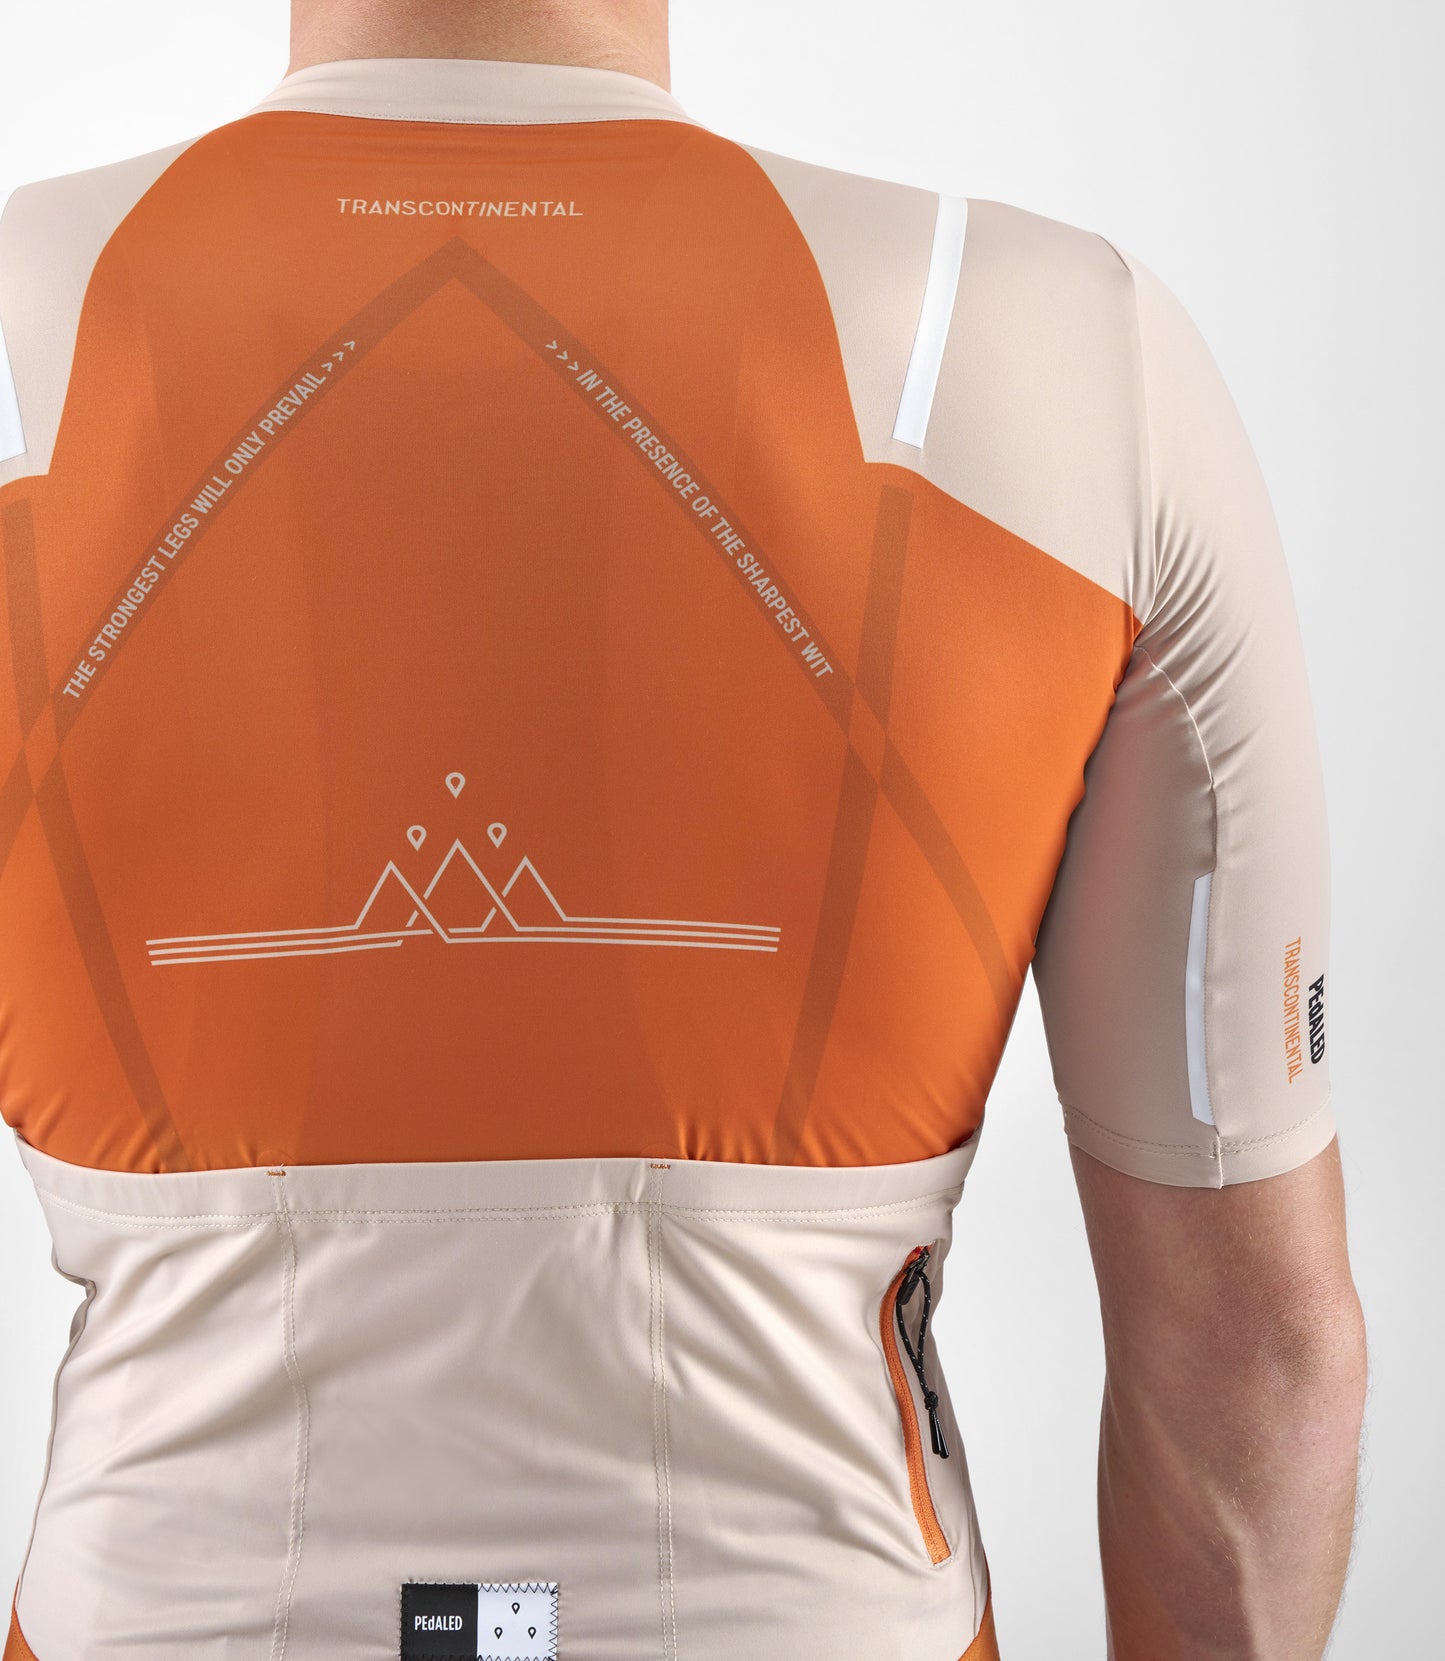 23SJSTC12PE_9_men cycling jersey transcontinental orange back reflective details pedaled